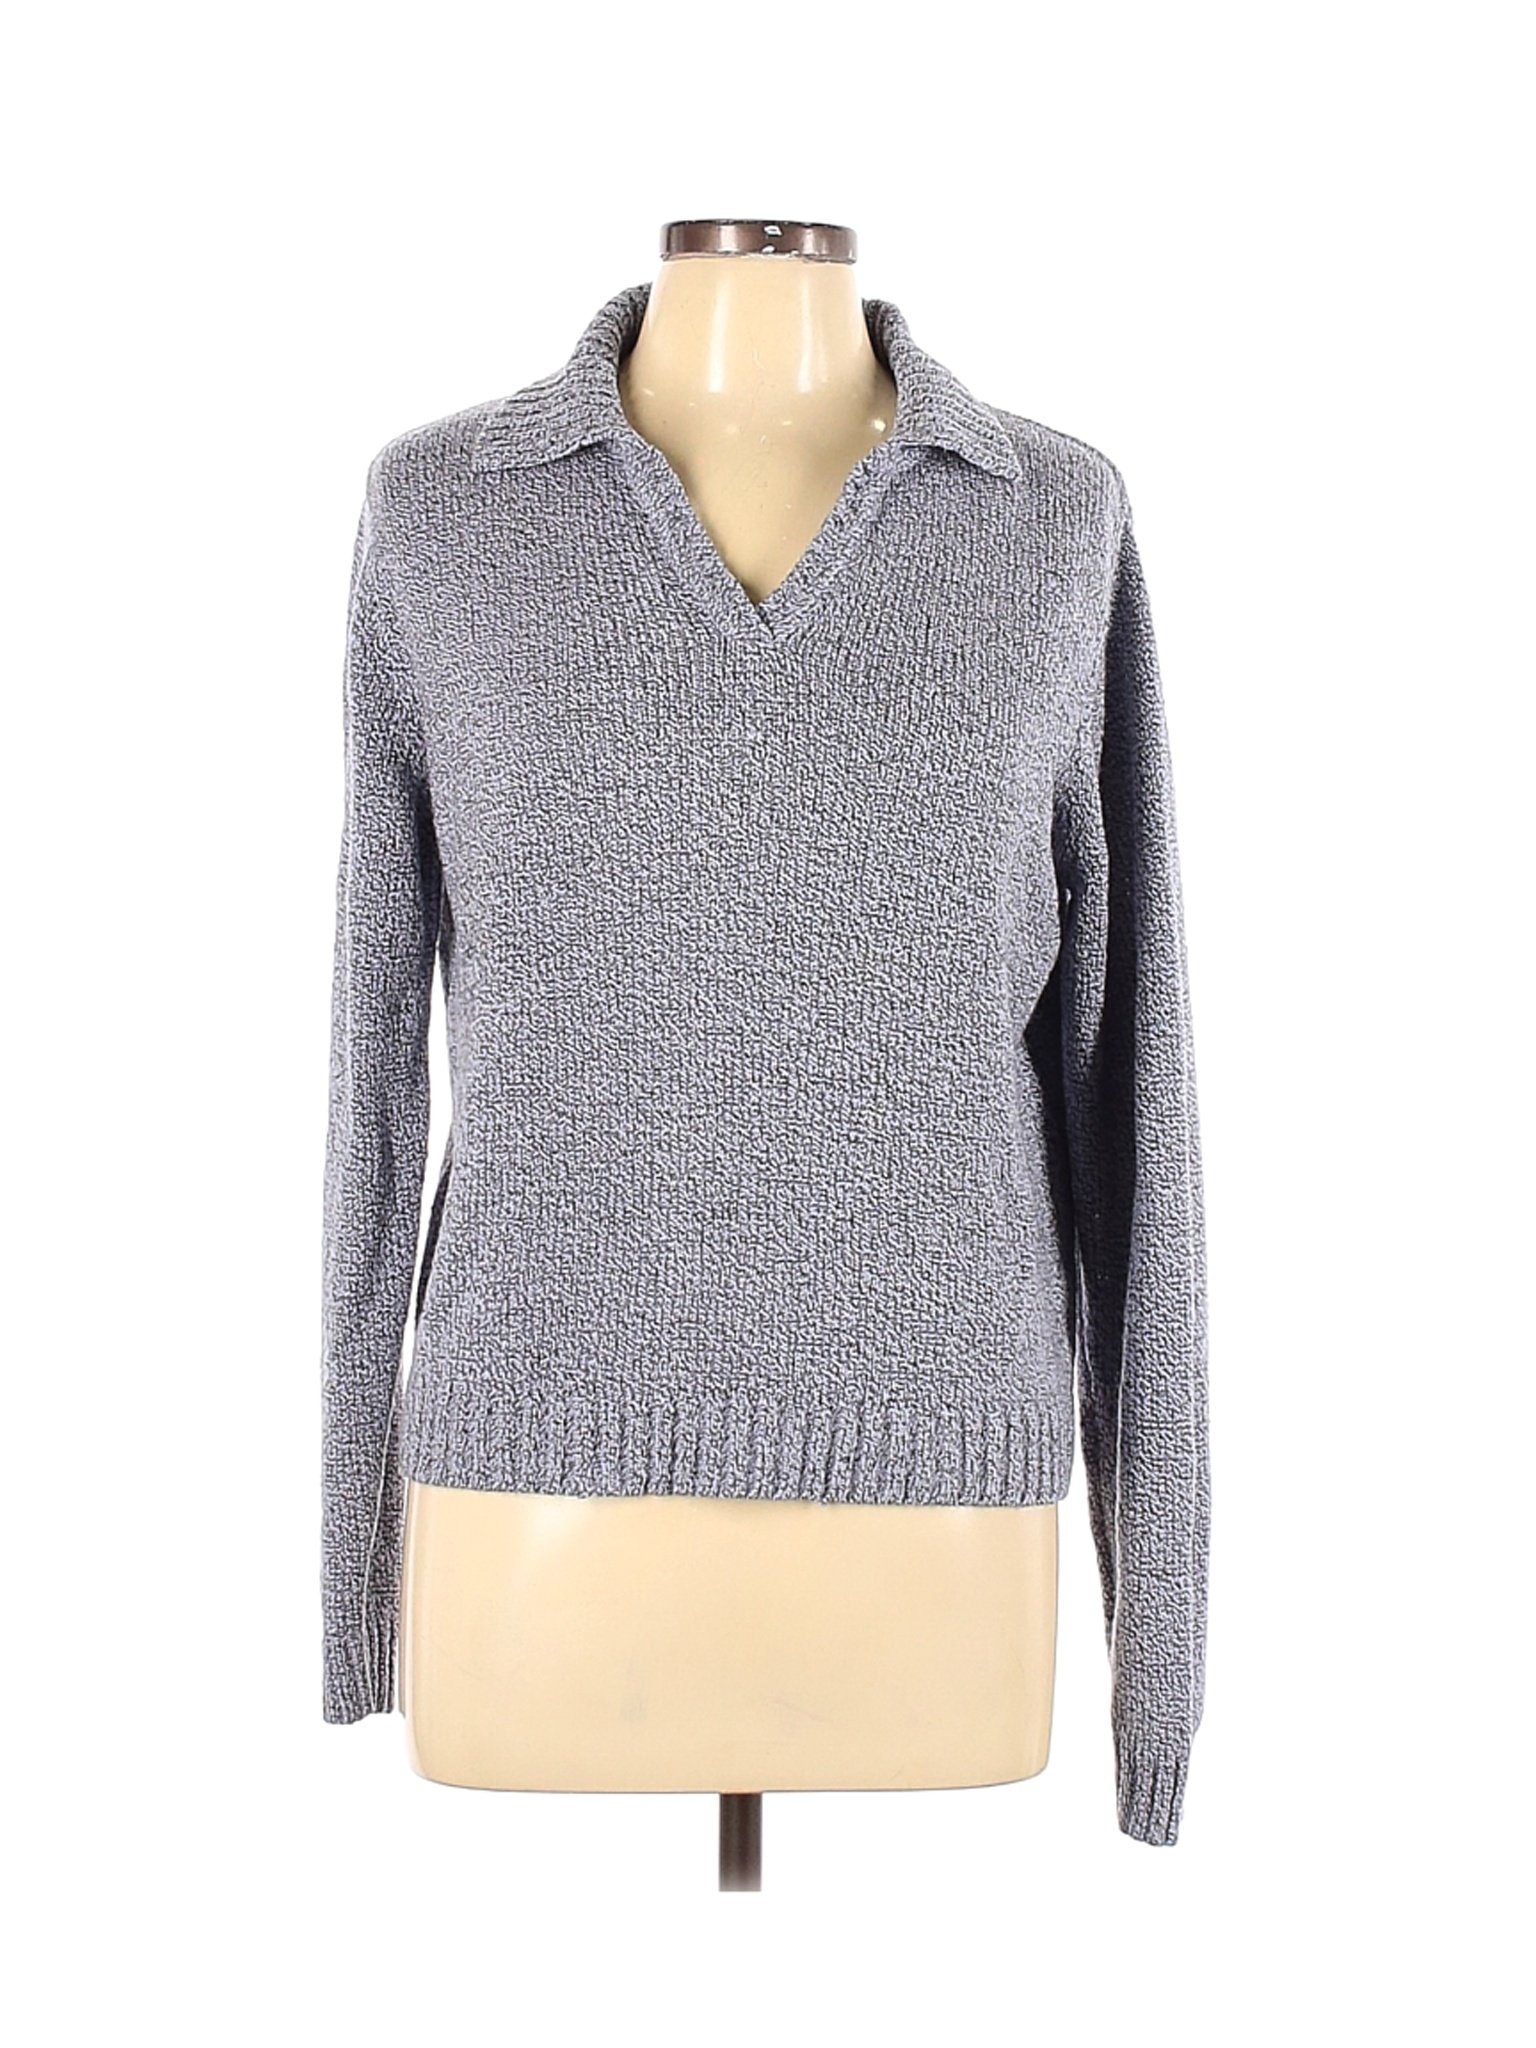 Carolyn Taylor Women Gray Pullover Sweater L | eBay